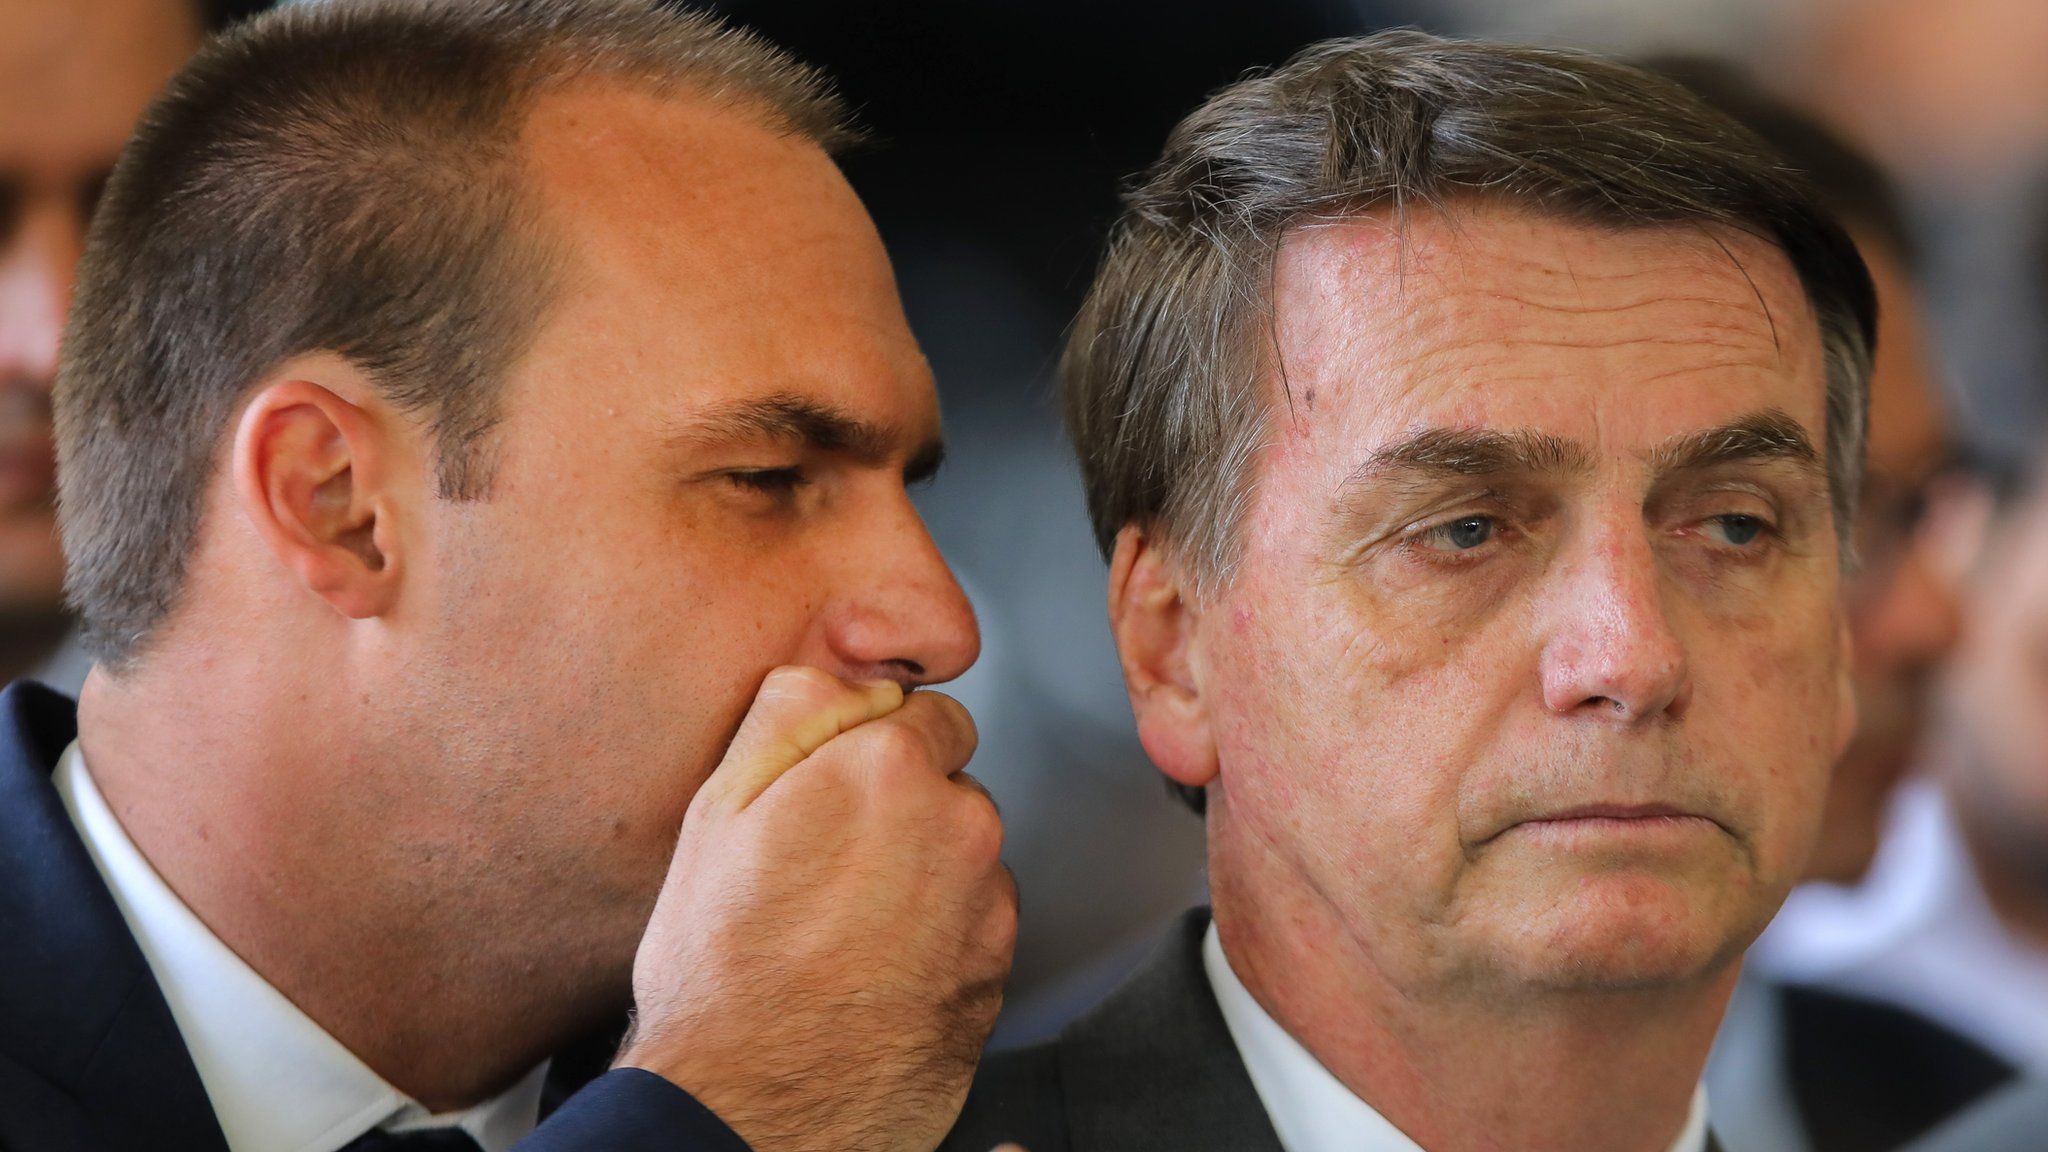 Eduardo whispering to his father, Jair Bolsonaro, at a conference in November